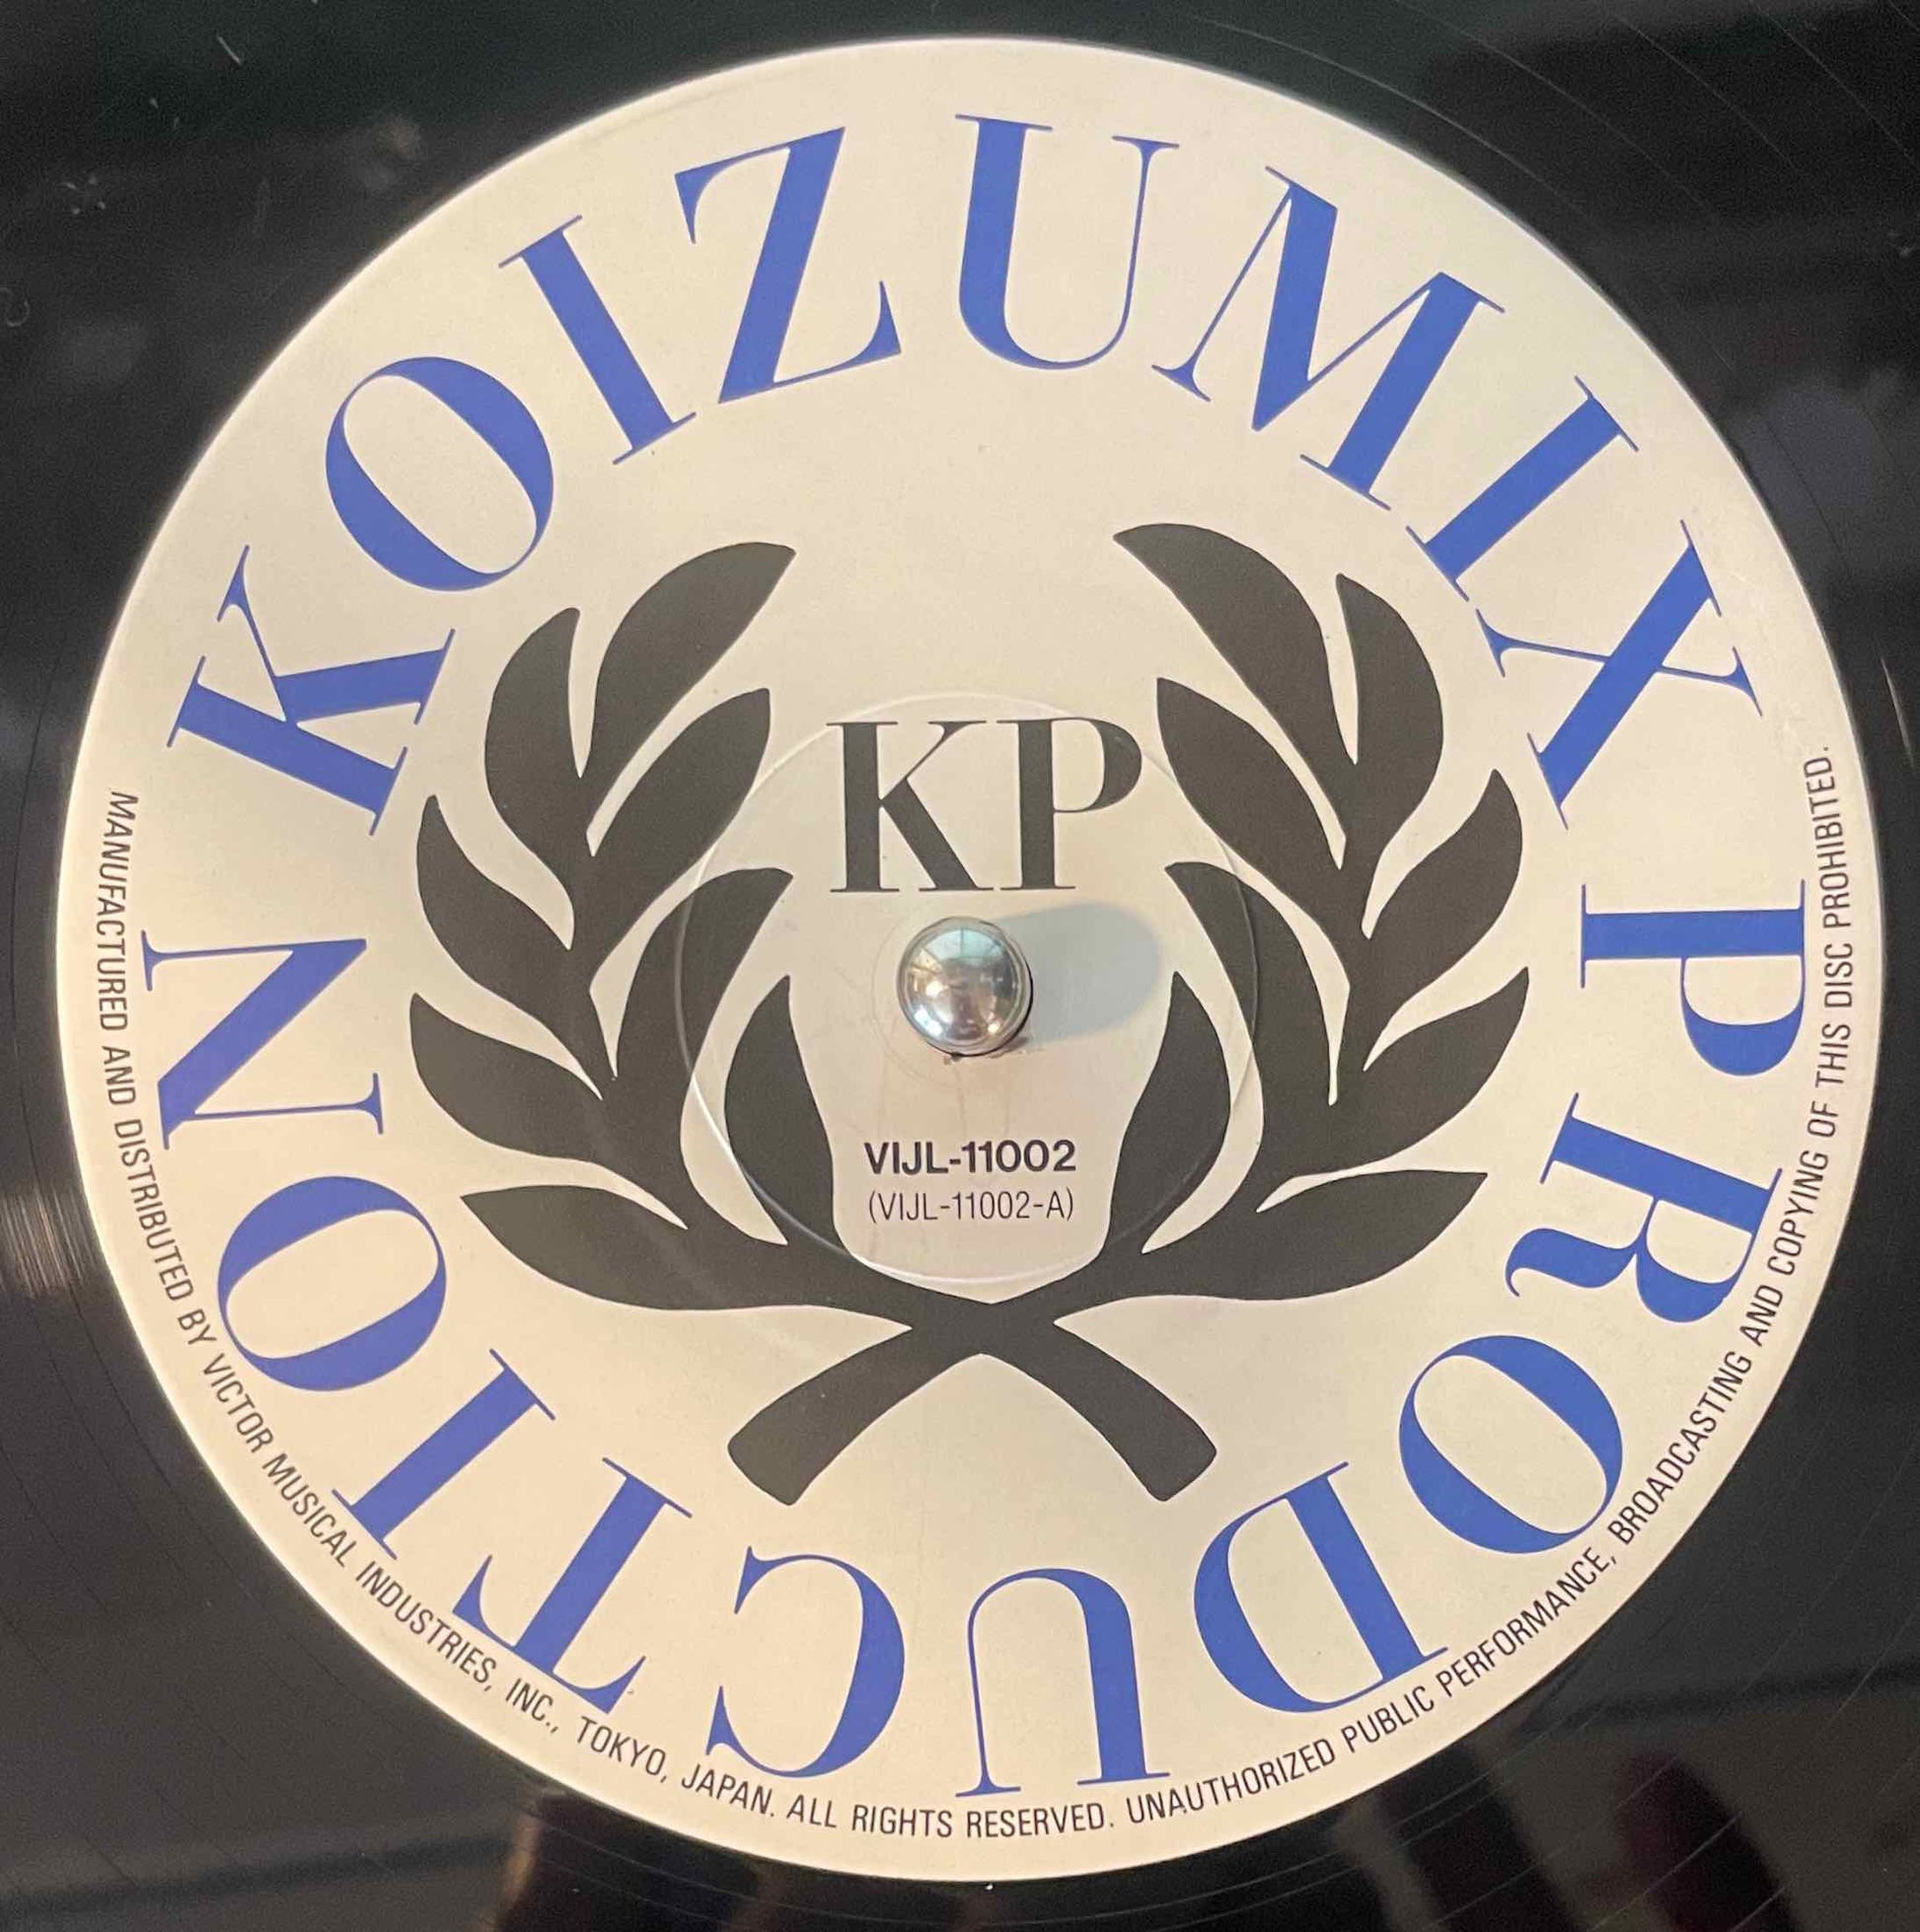 Kyoko Koizumi – Koizumix Production II 12 inch single label image front